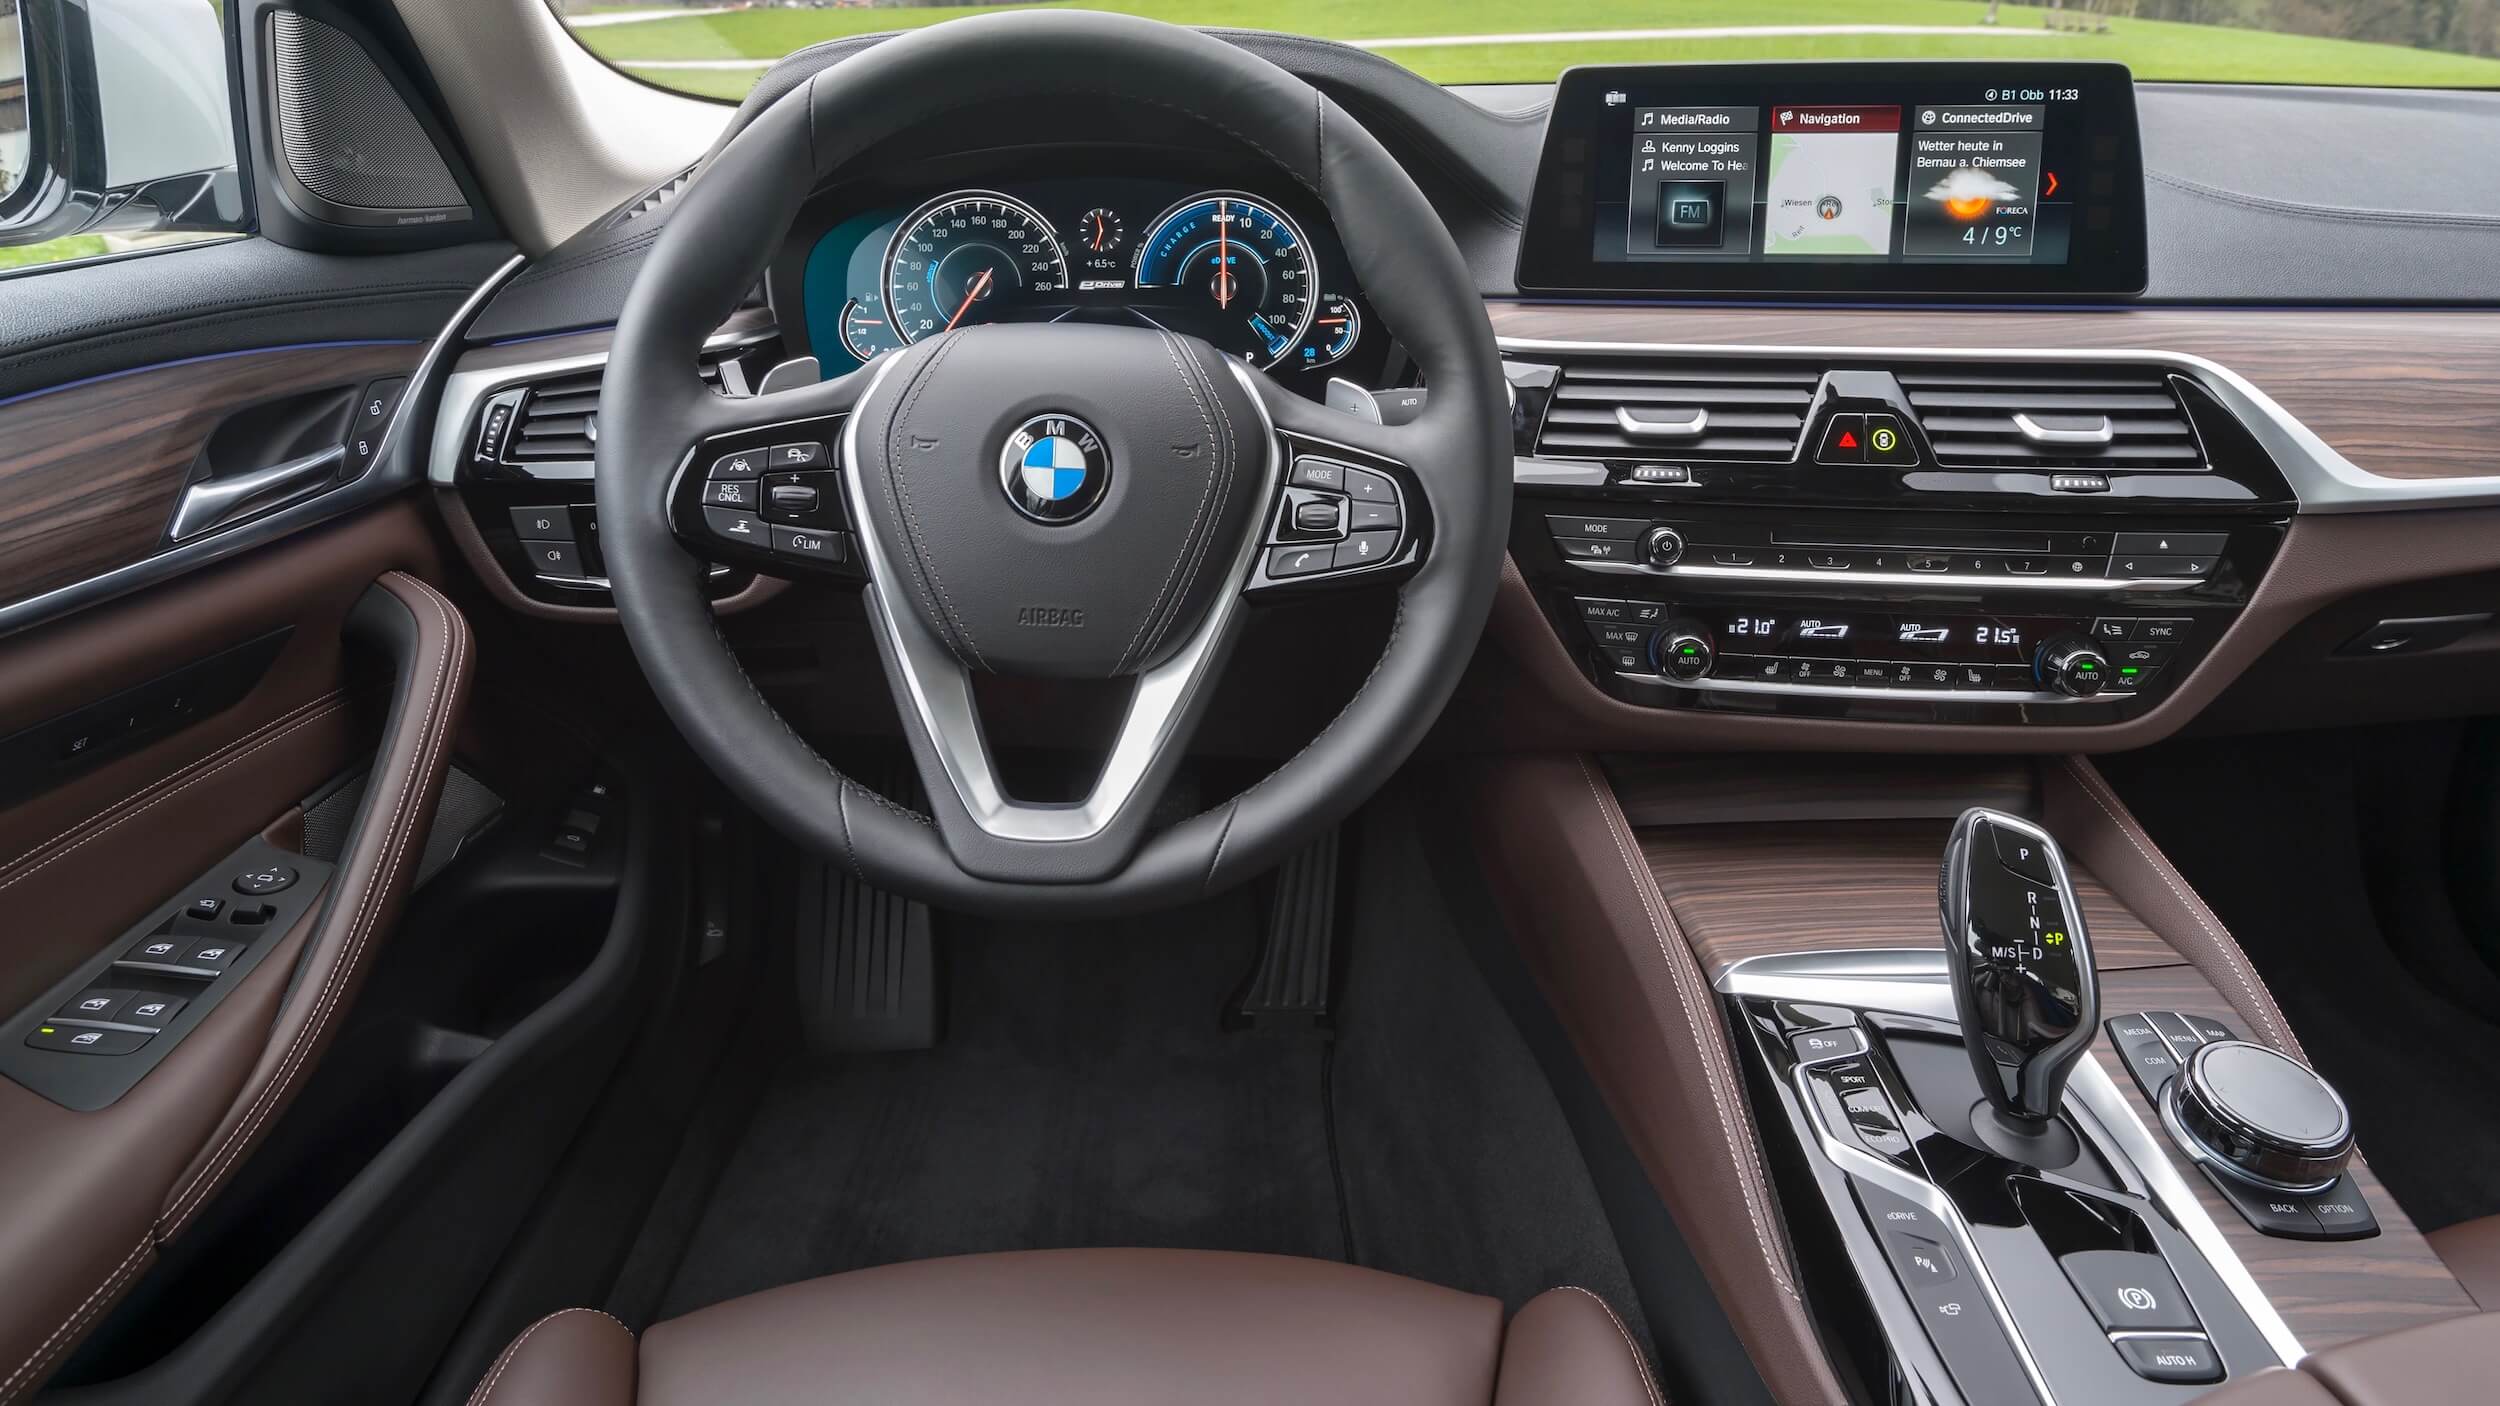 BMW 530e cockpit